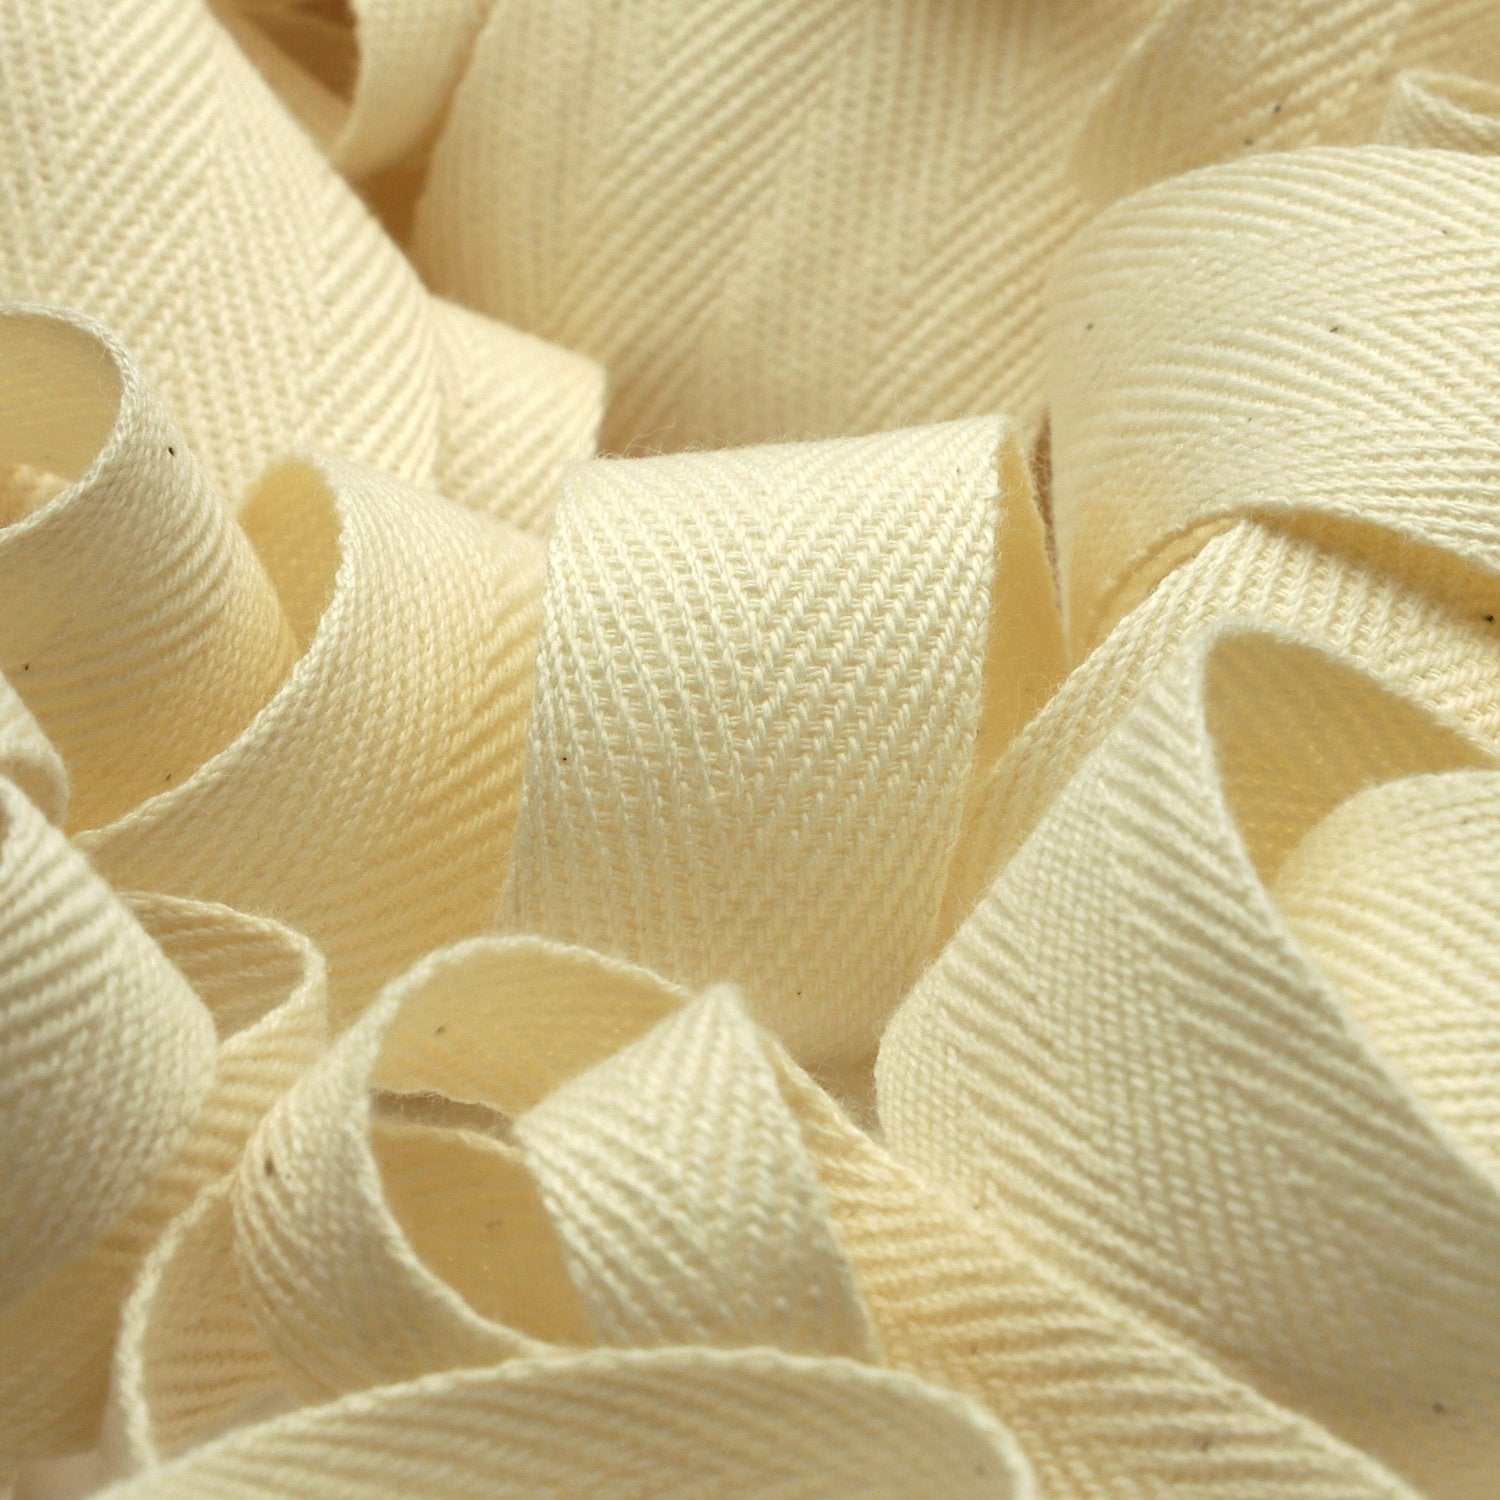 FUJIYAMA RIBBON [Wholesale] Organic Cotton Herringbone Ribbon 25mm Ecru 30 Meters Roll